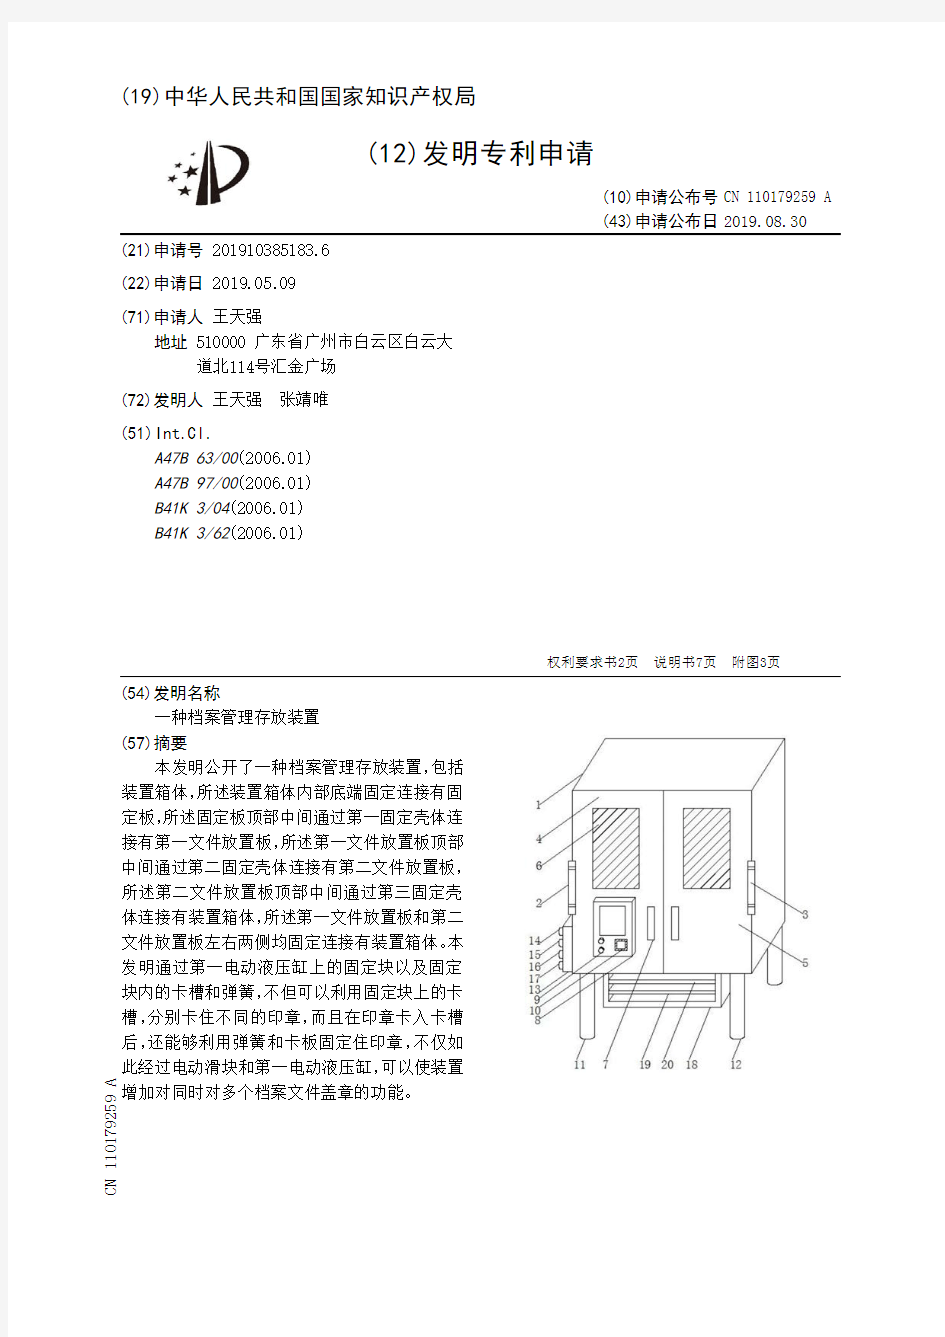 【CN110179259A】一种档案管理存放装置【专利】